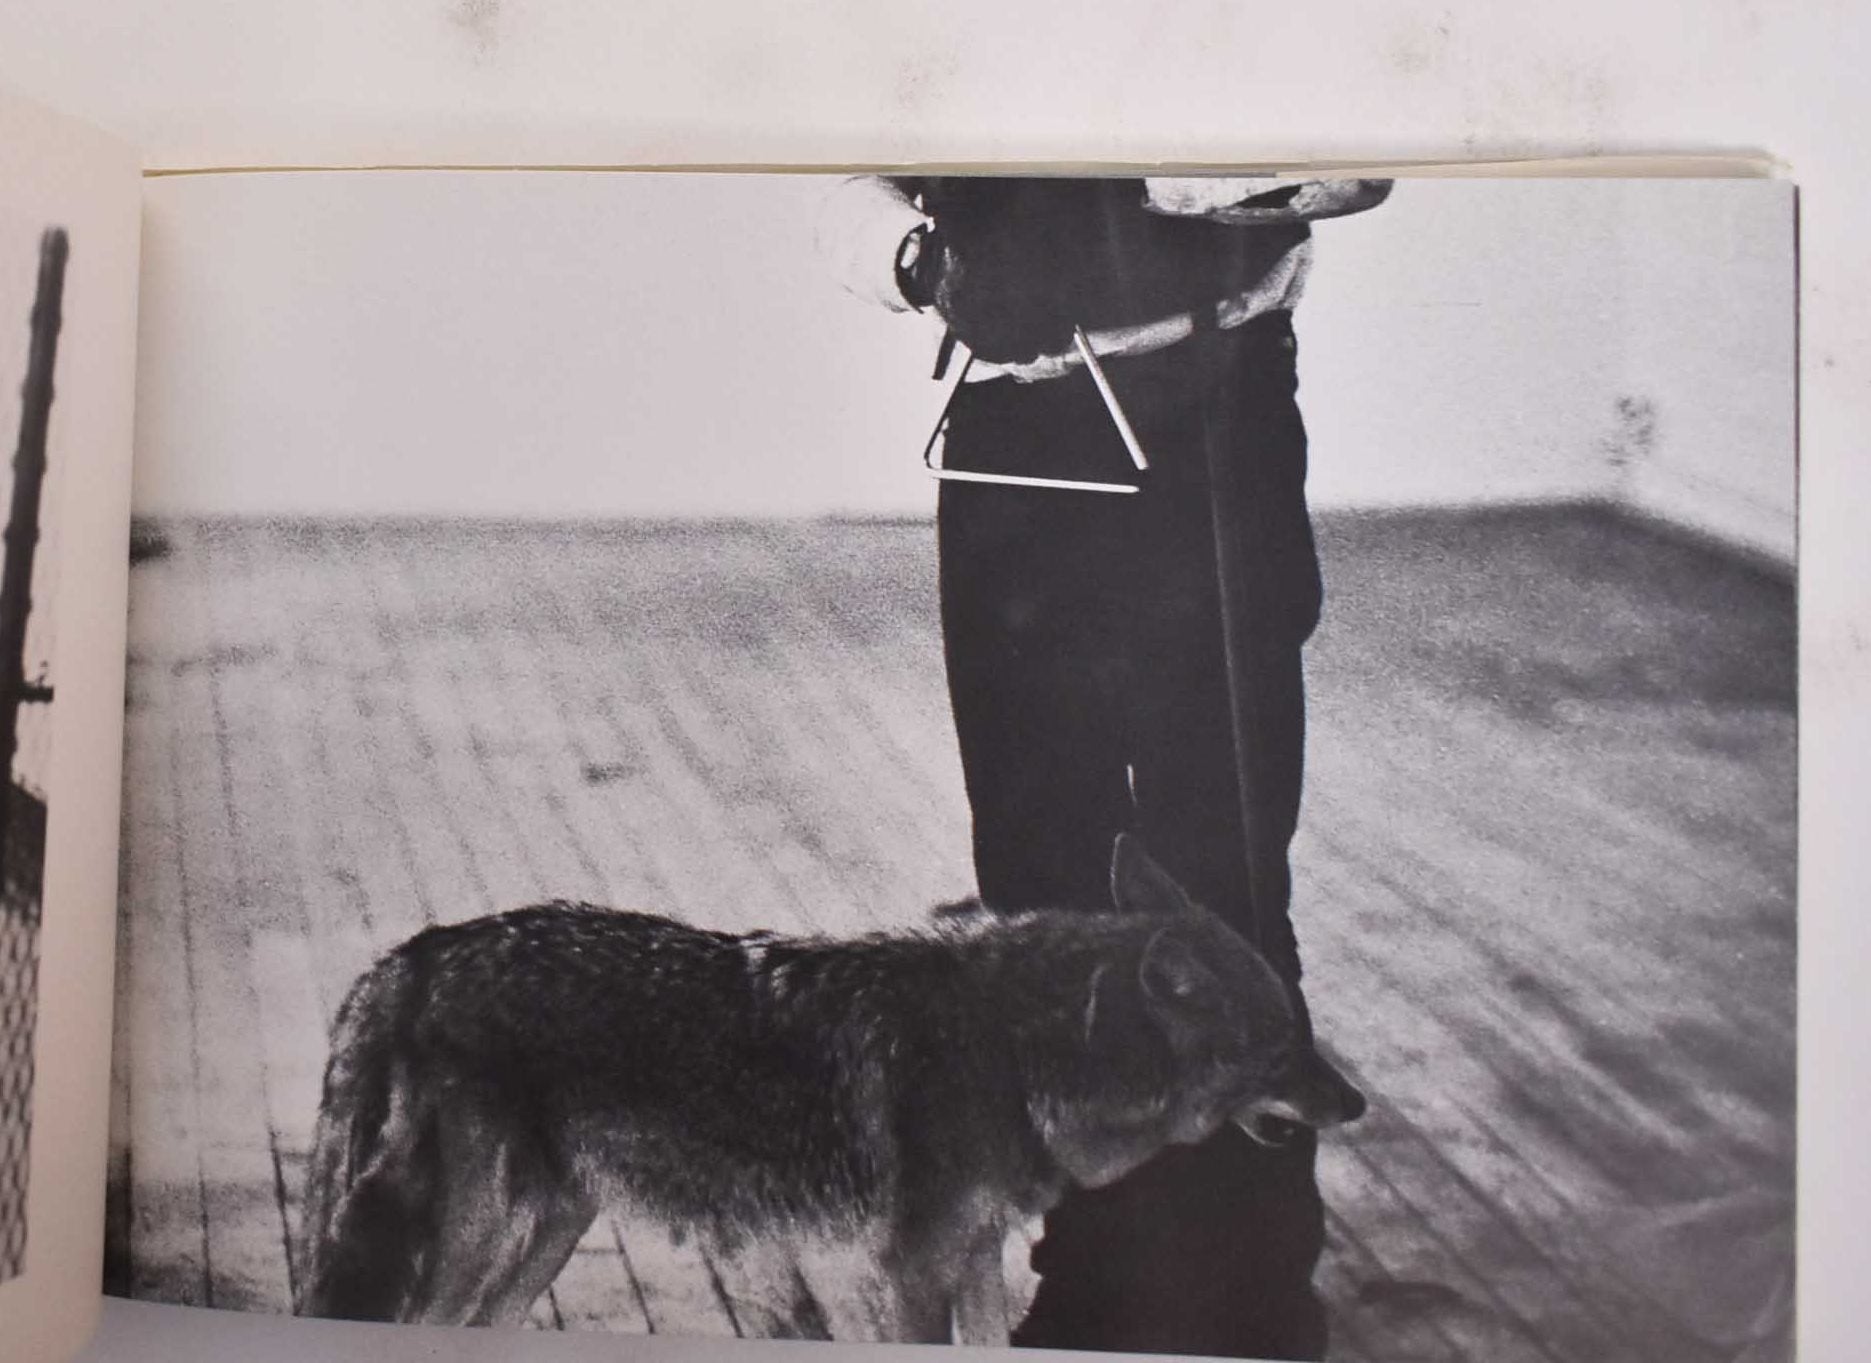 Joseph Beuys: Coyote | Caroline Tisdall, Joseph Beuys